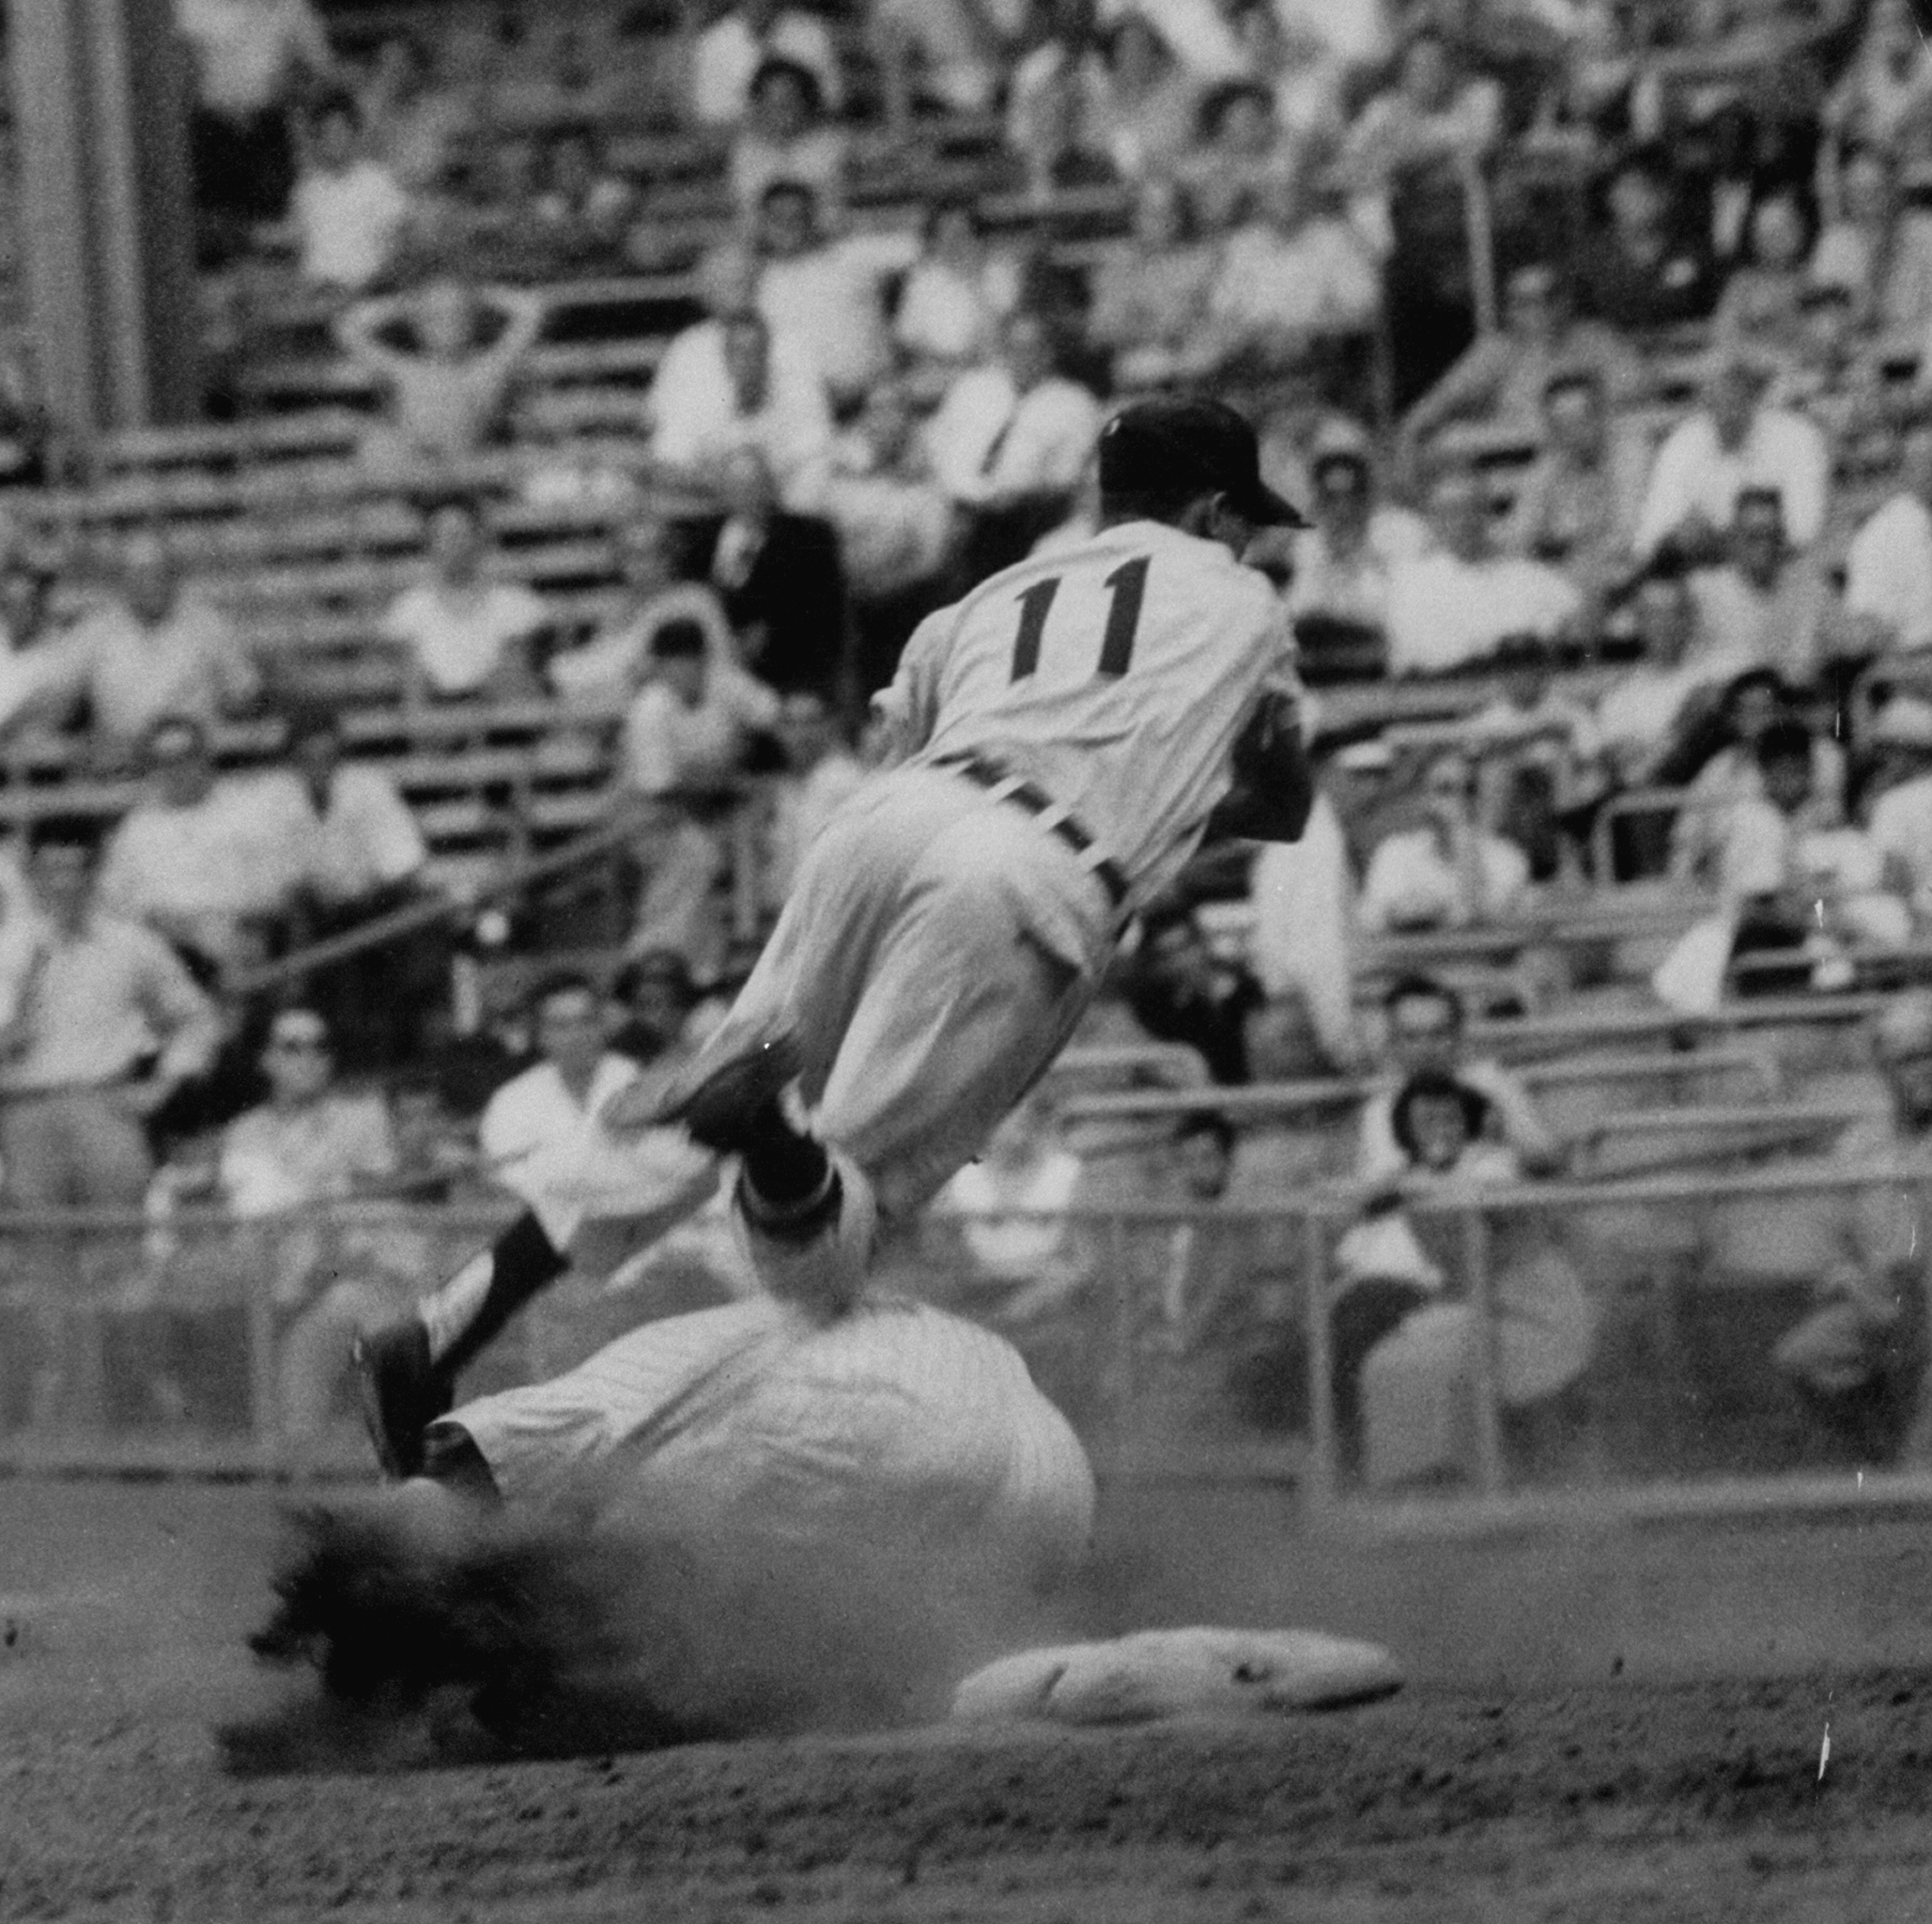 Mickey Mantle slams into Luis Aparicio's feet while sliding into second, June 1956.